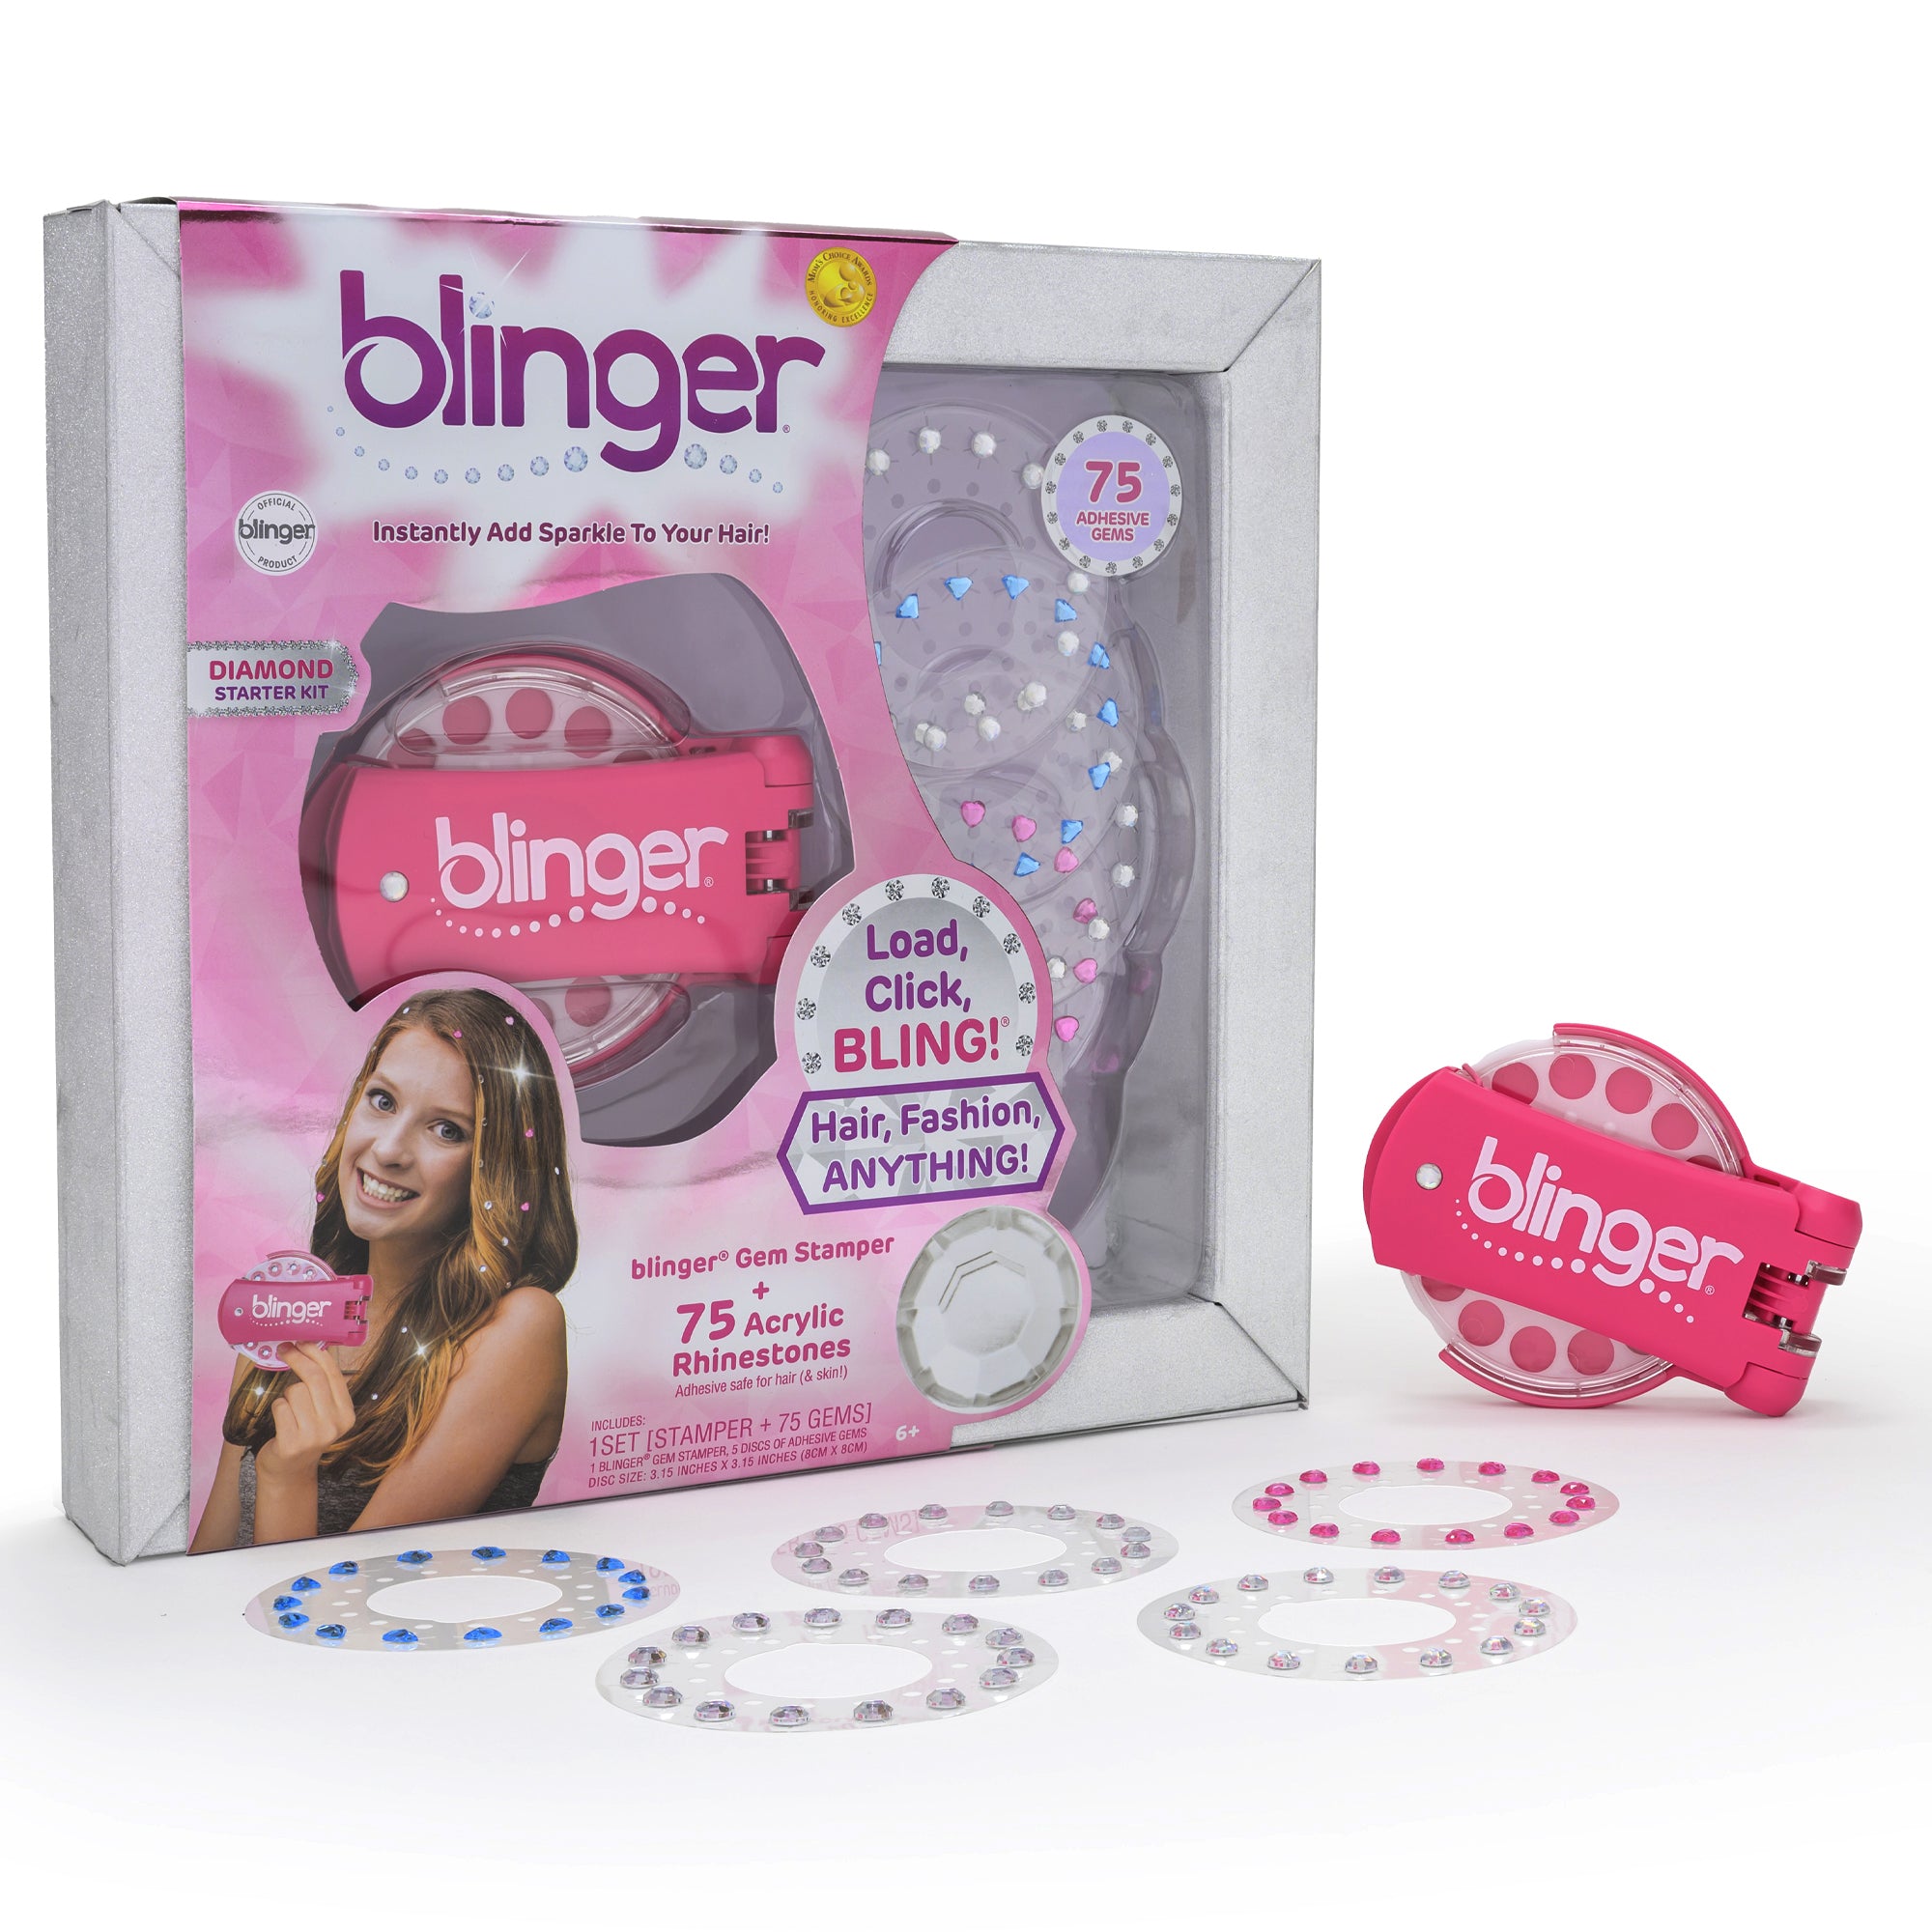 blinger® Diamond Collection Starter Kit with blinger® Gem Stamper + 75 Colorful Acrylic Gems